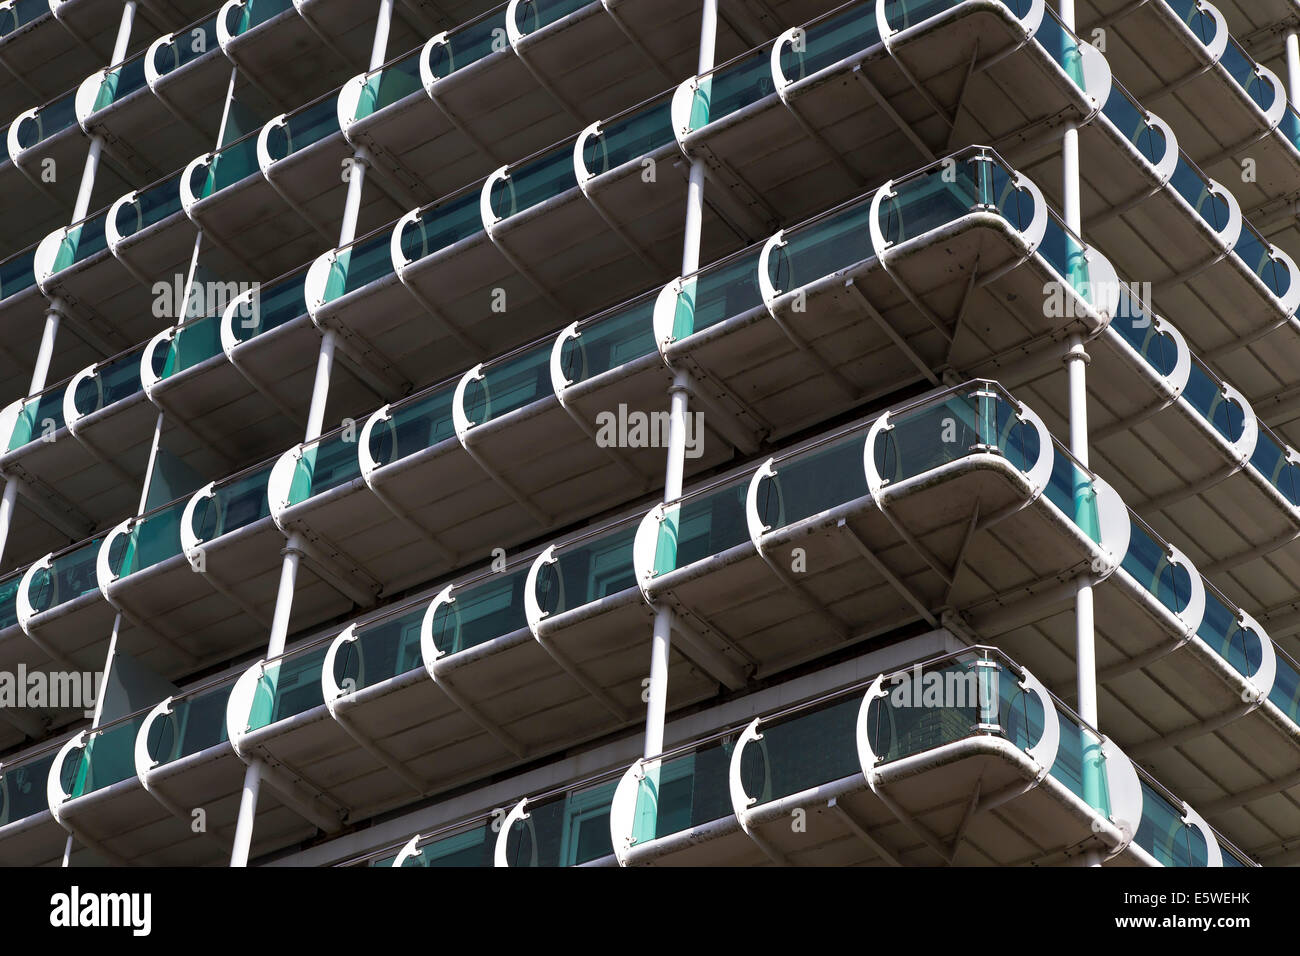 Tower Block with glass fronted verandas/walkways Stock Photo